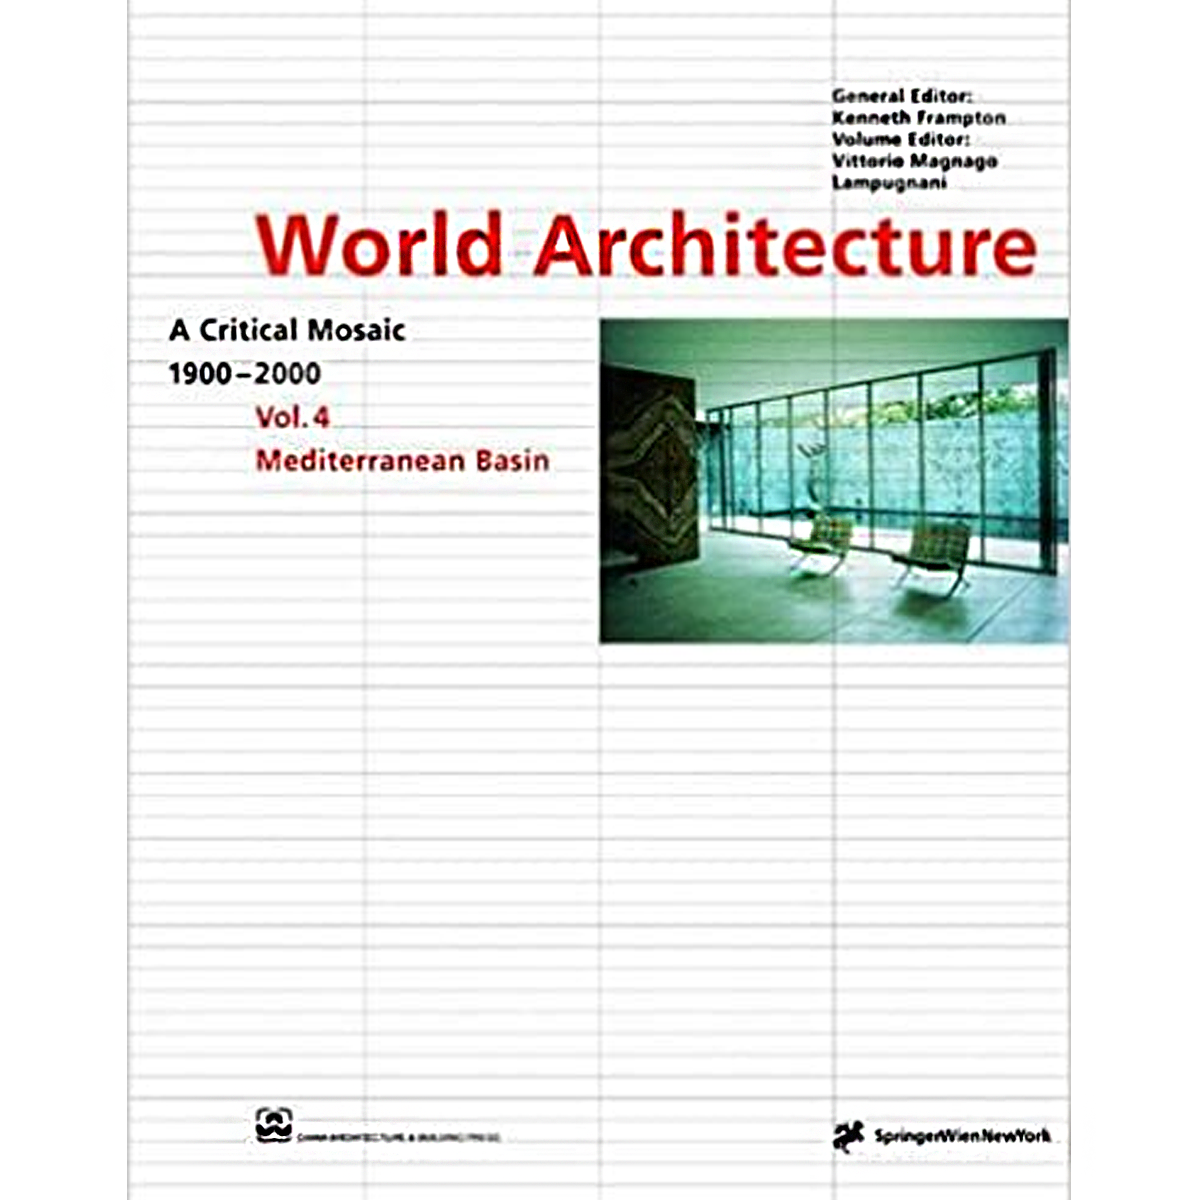 World Architecture: A Critical Mosaic 1900-2000, volume 4